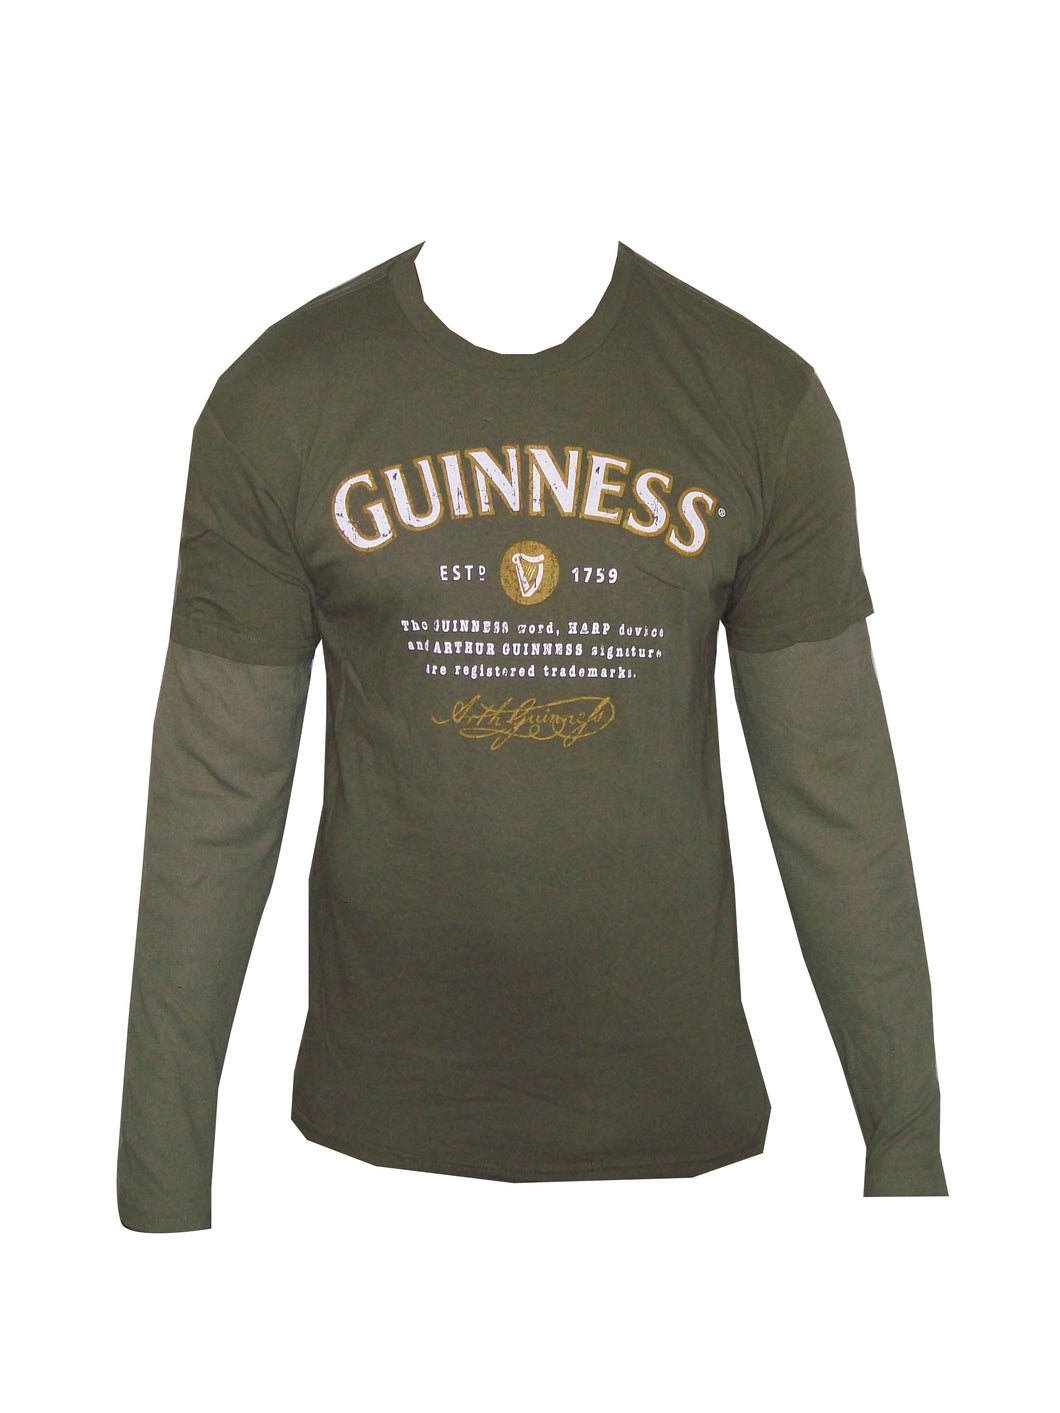 Trademark and Signature T-Shirt